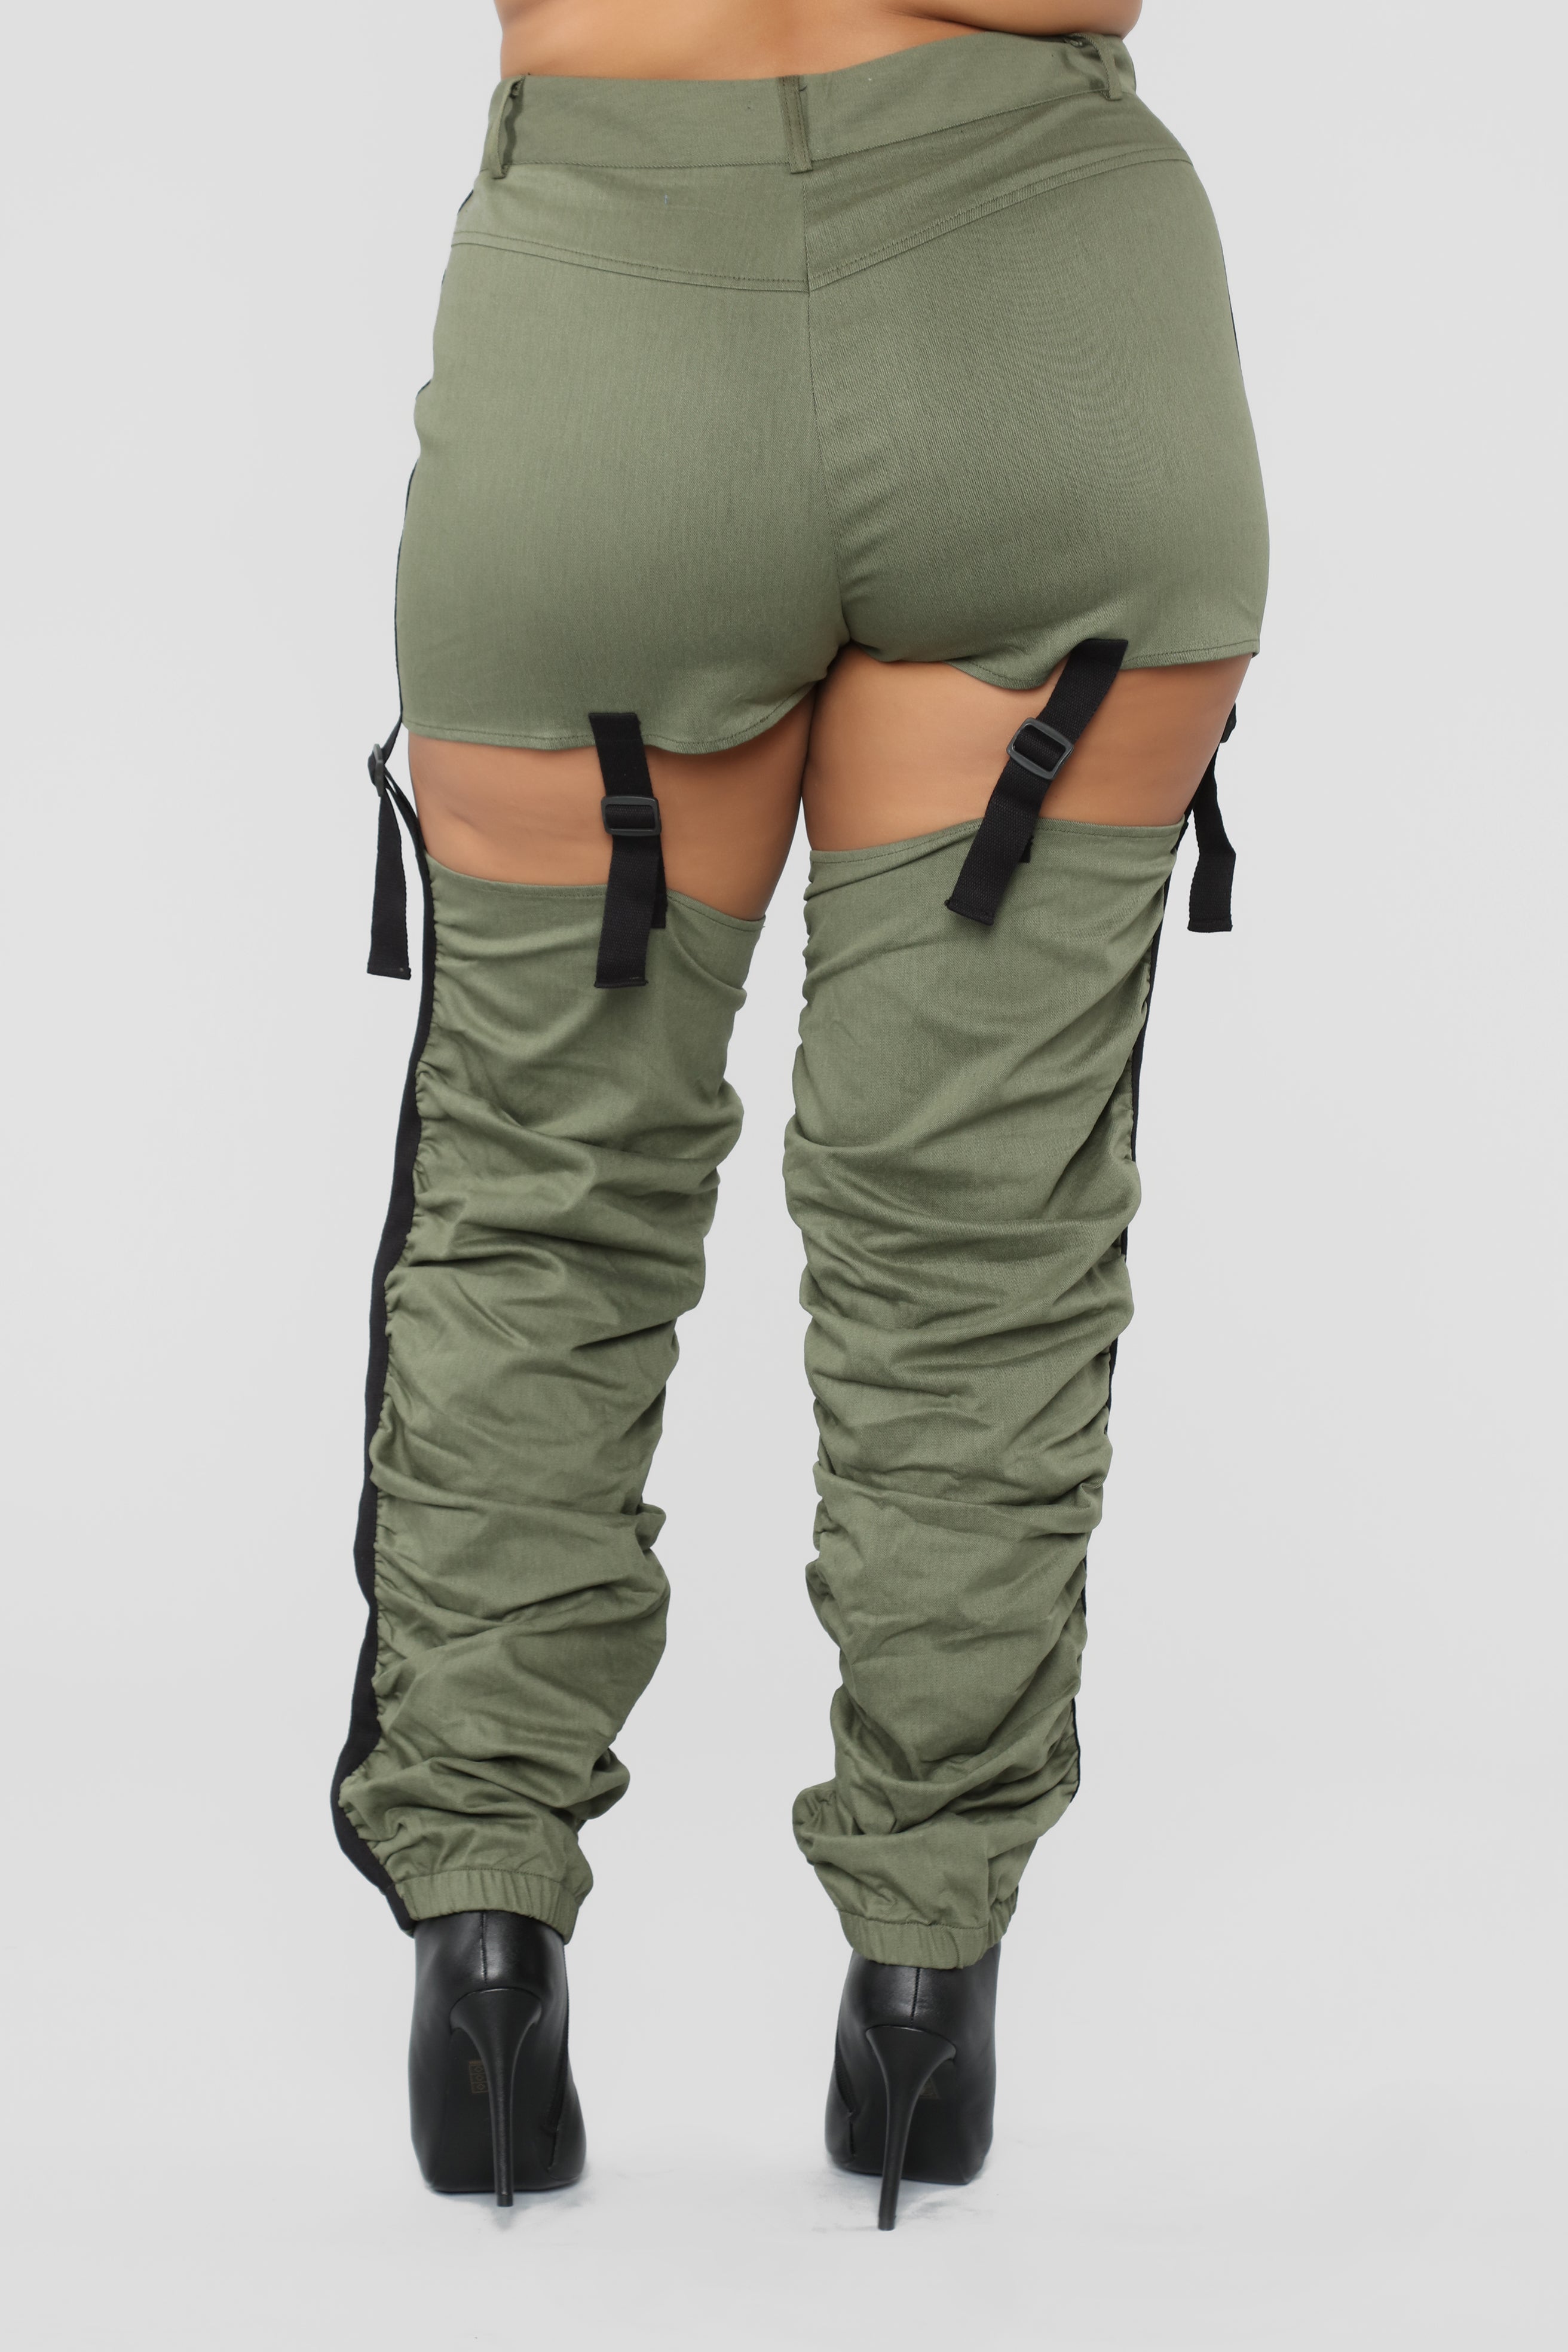 Just A Little Bit Cargo Pants - Olive – Fashion Nova